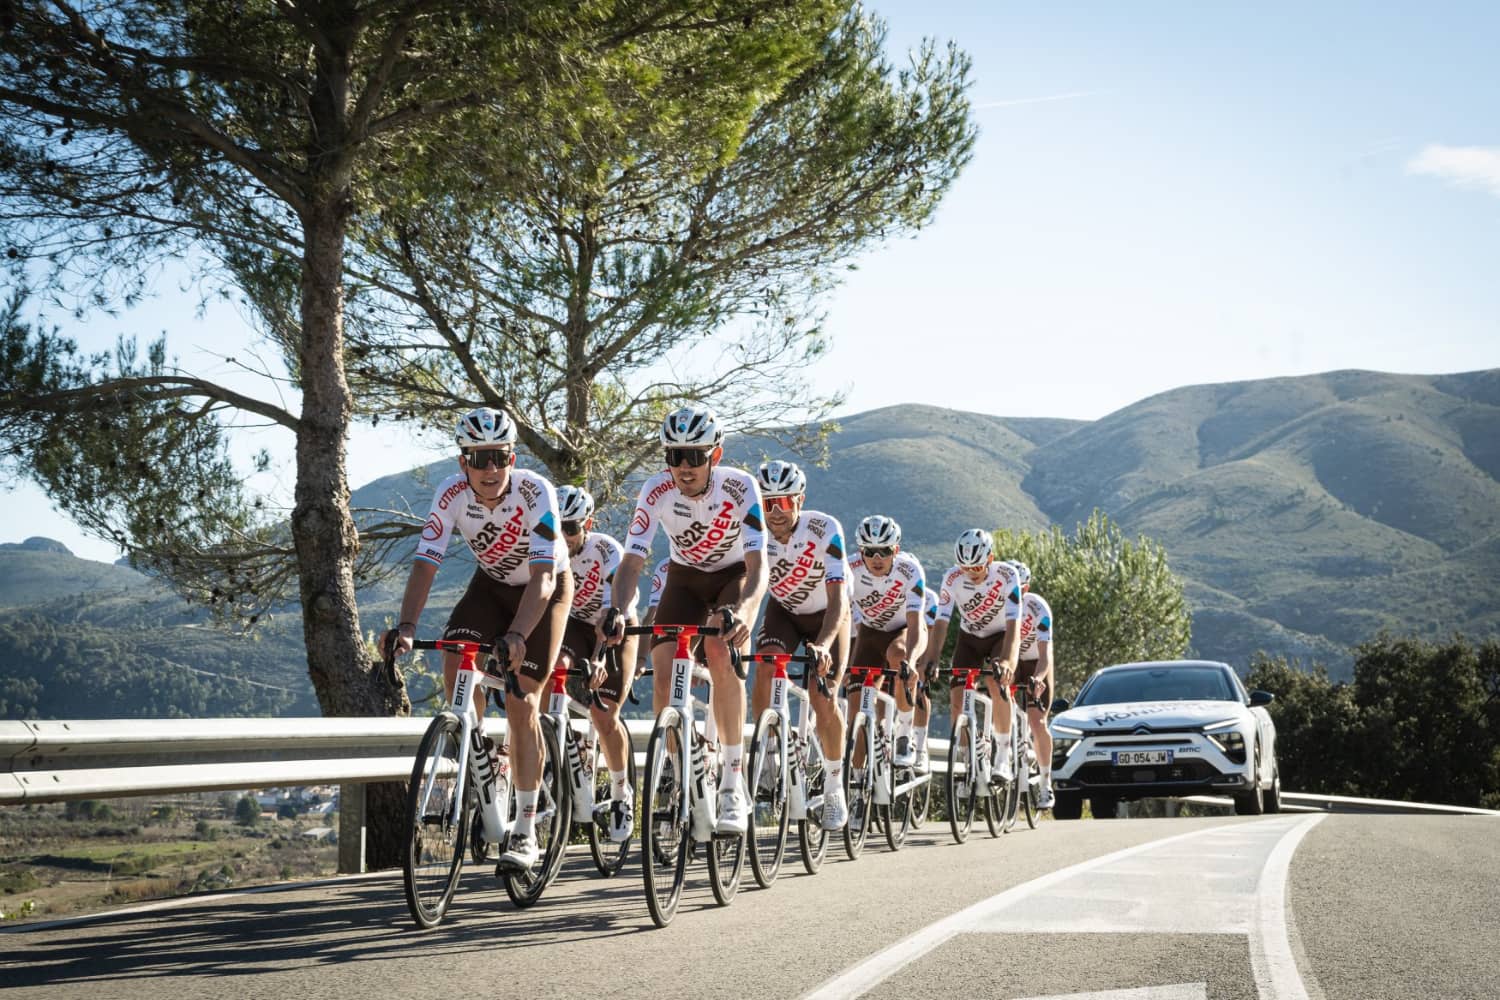 Cycling Apparel Brand Rosti Introduces All-Denim Riding Shorts